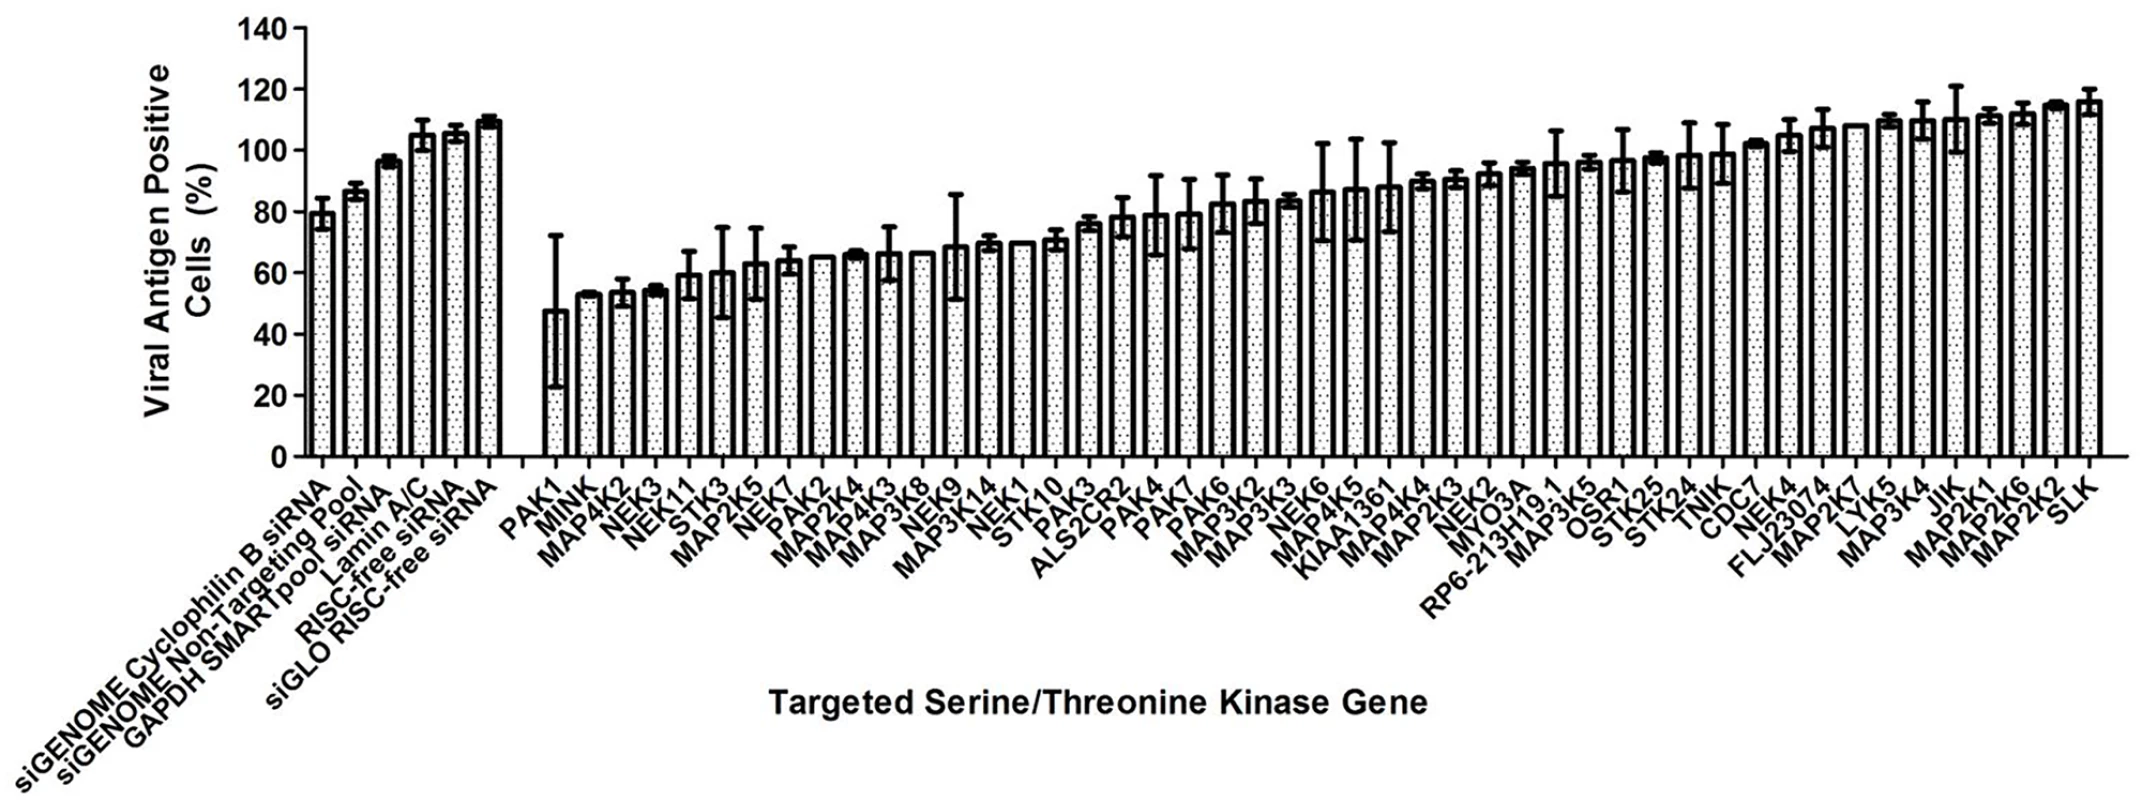 Human serine/threonine kinase siRNA library screen.